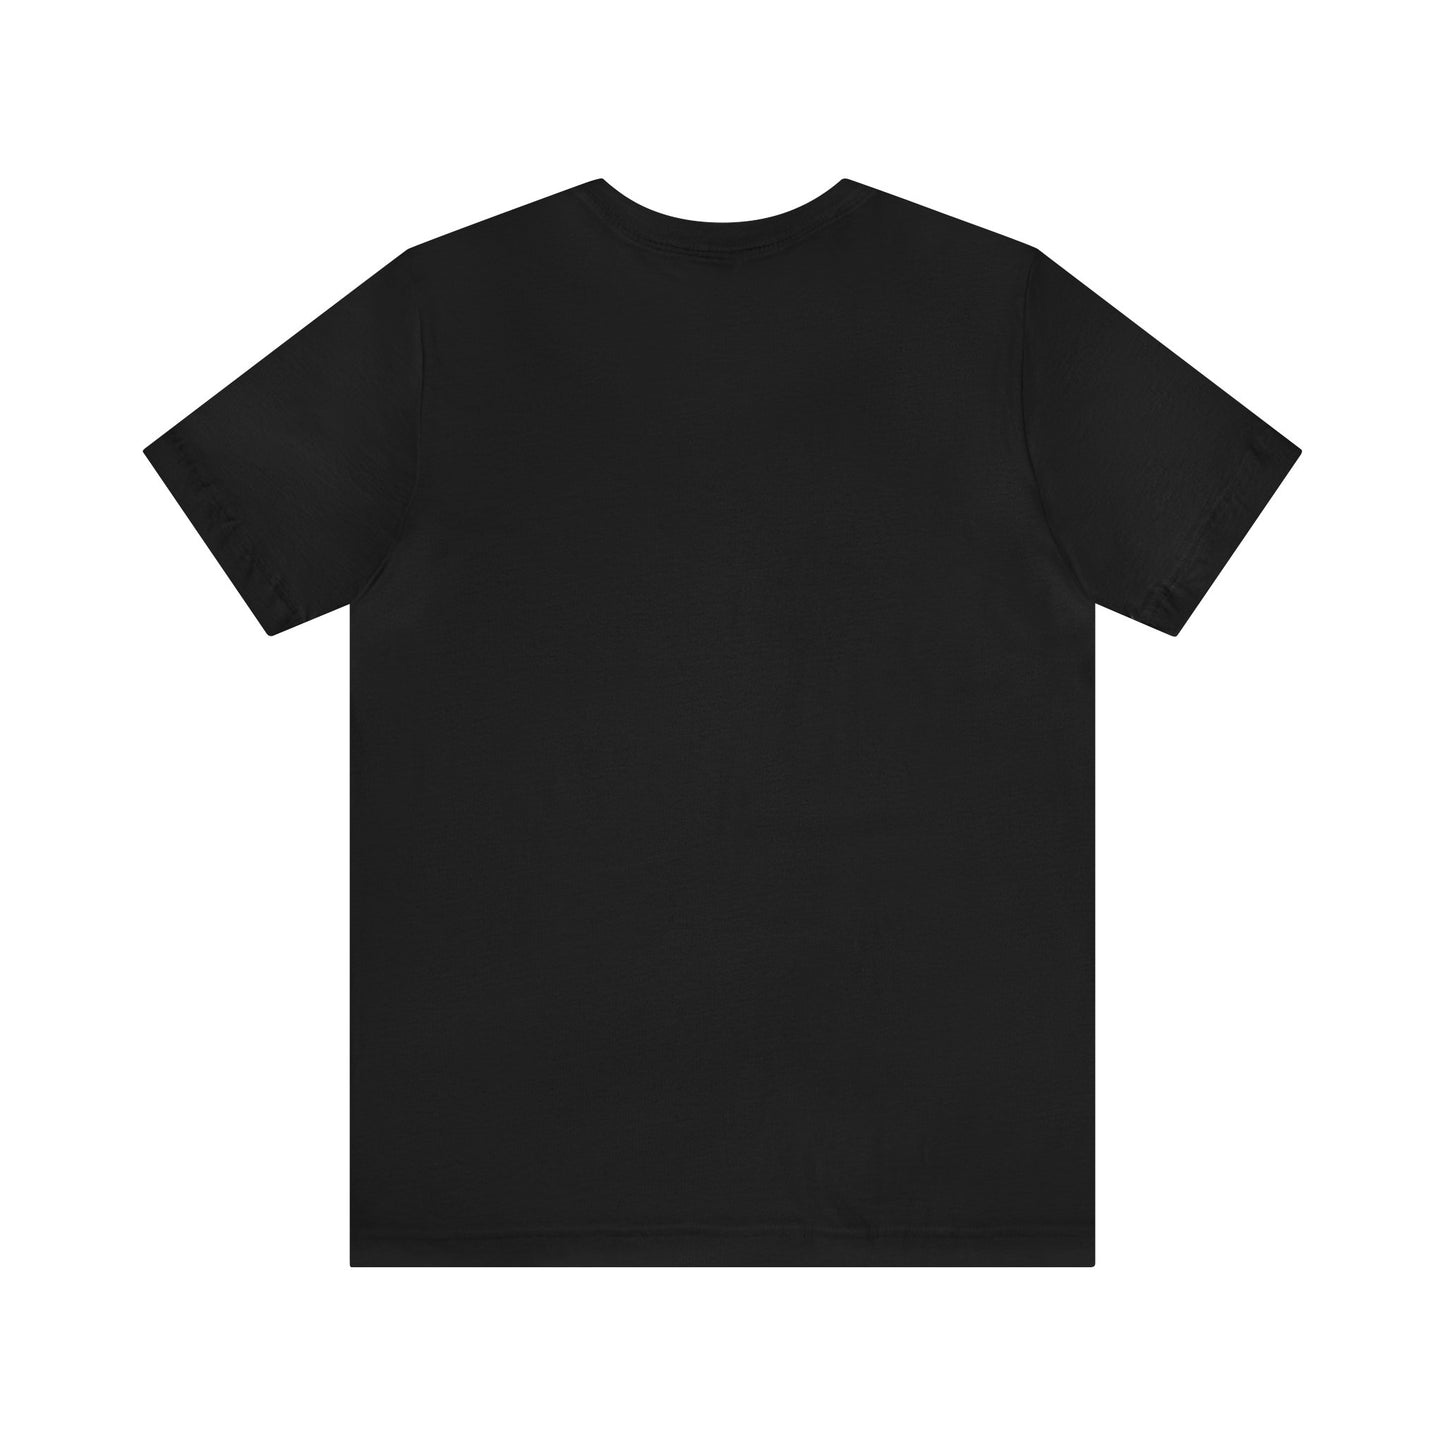 Unisex Jersey Short Sleeve Black T Shirt